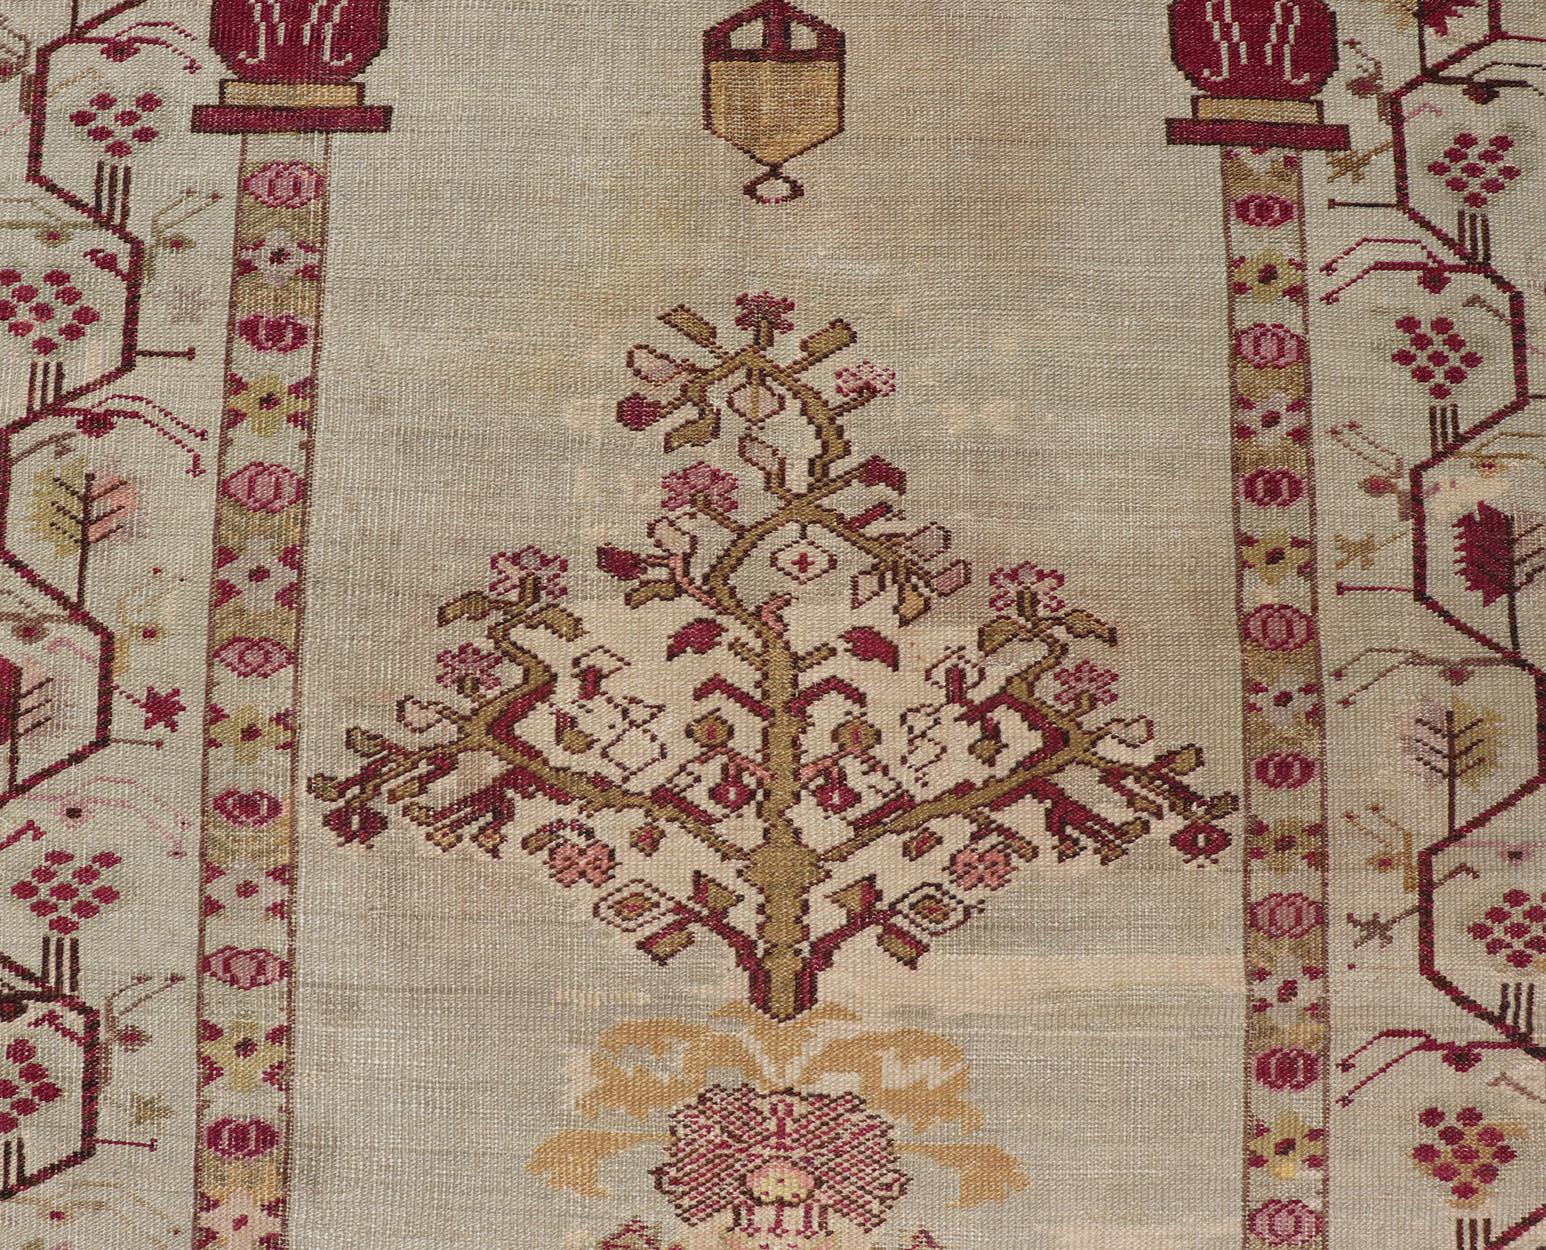 Antique Turkish Oushak prayer design rug in ivory background and various tones in unique Color combination with Columns, Chandelier & Vase design
Keivan Woven Arts/ Rug / V21-0808, 

Measures: 4'0 x 6'10.